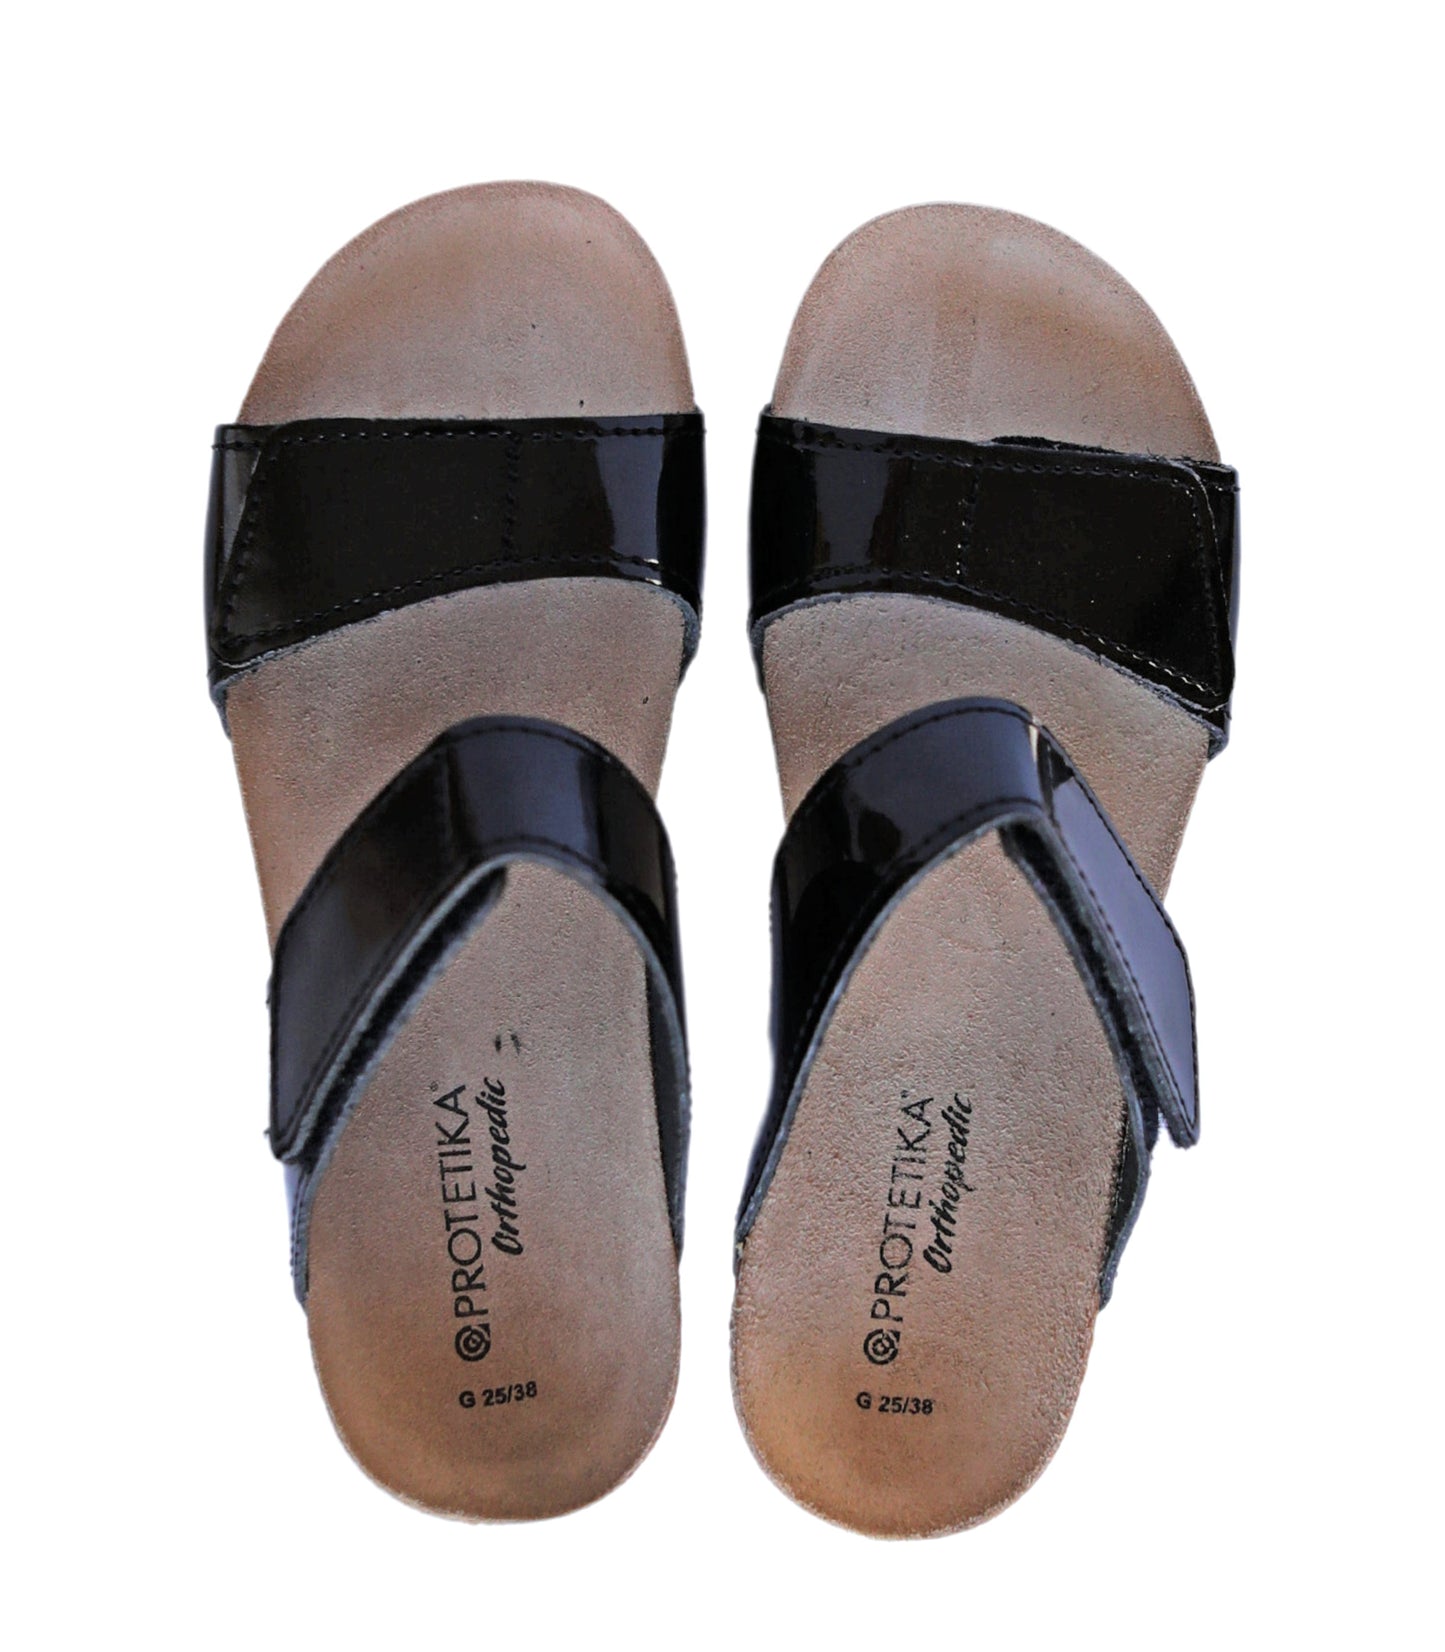 T86: 2 straps glossy black ladies orthotic wedge sandals